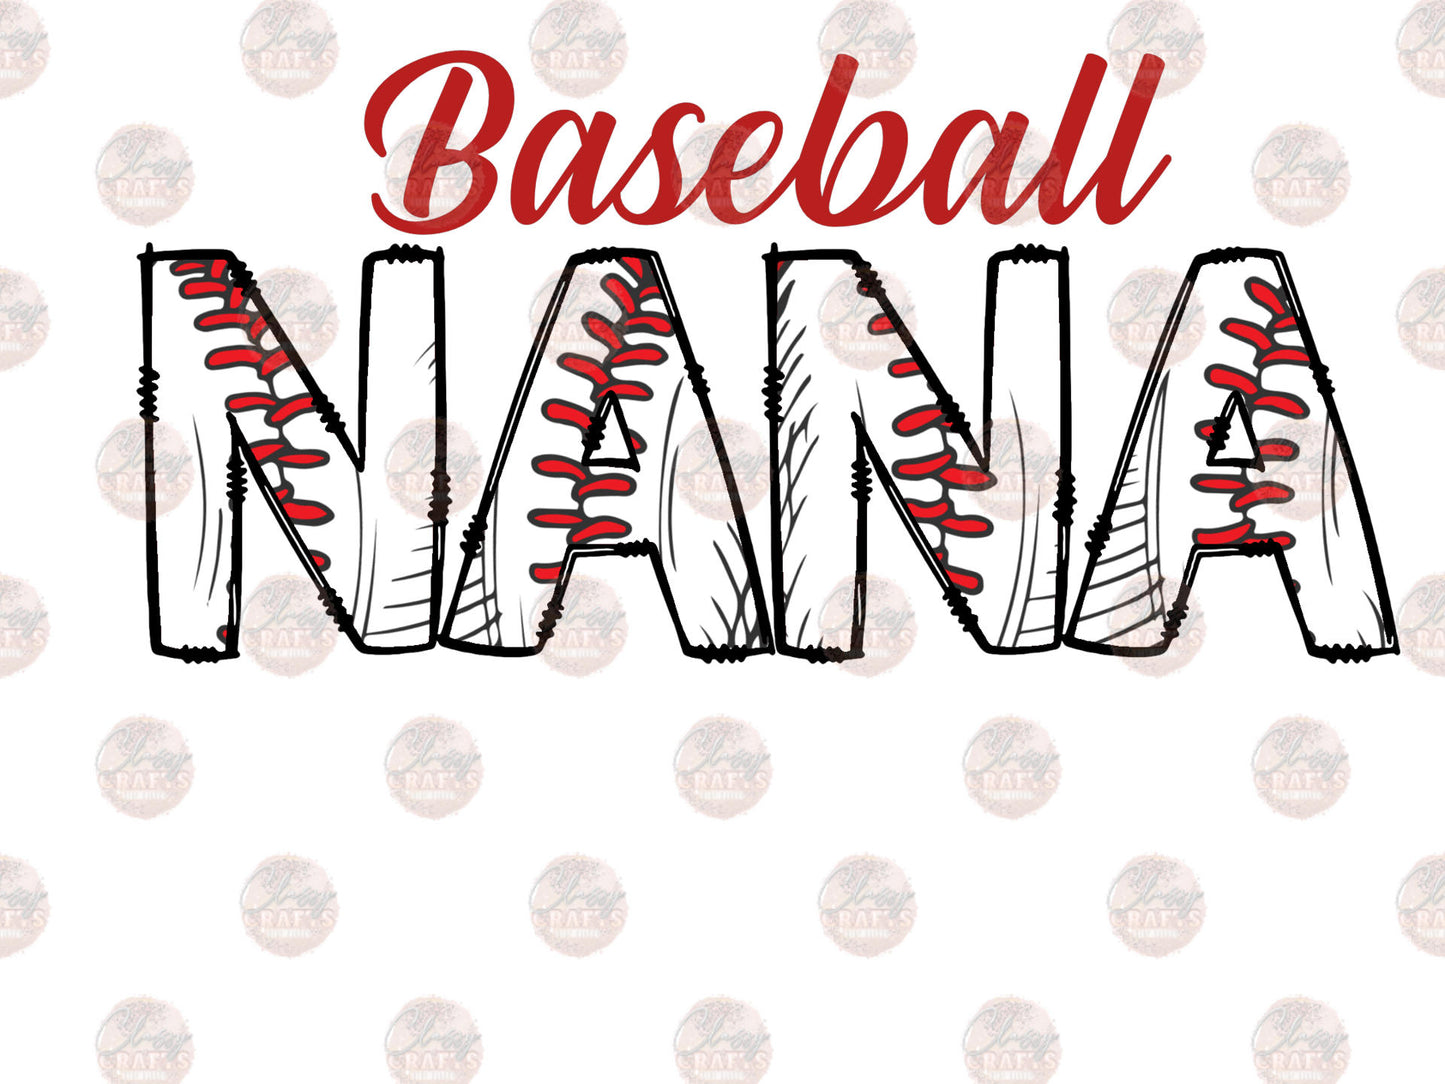 Baseball Nana Transfer